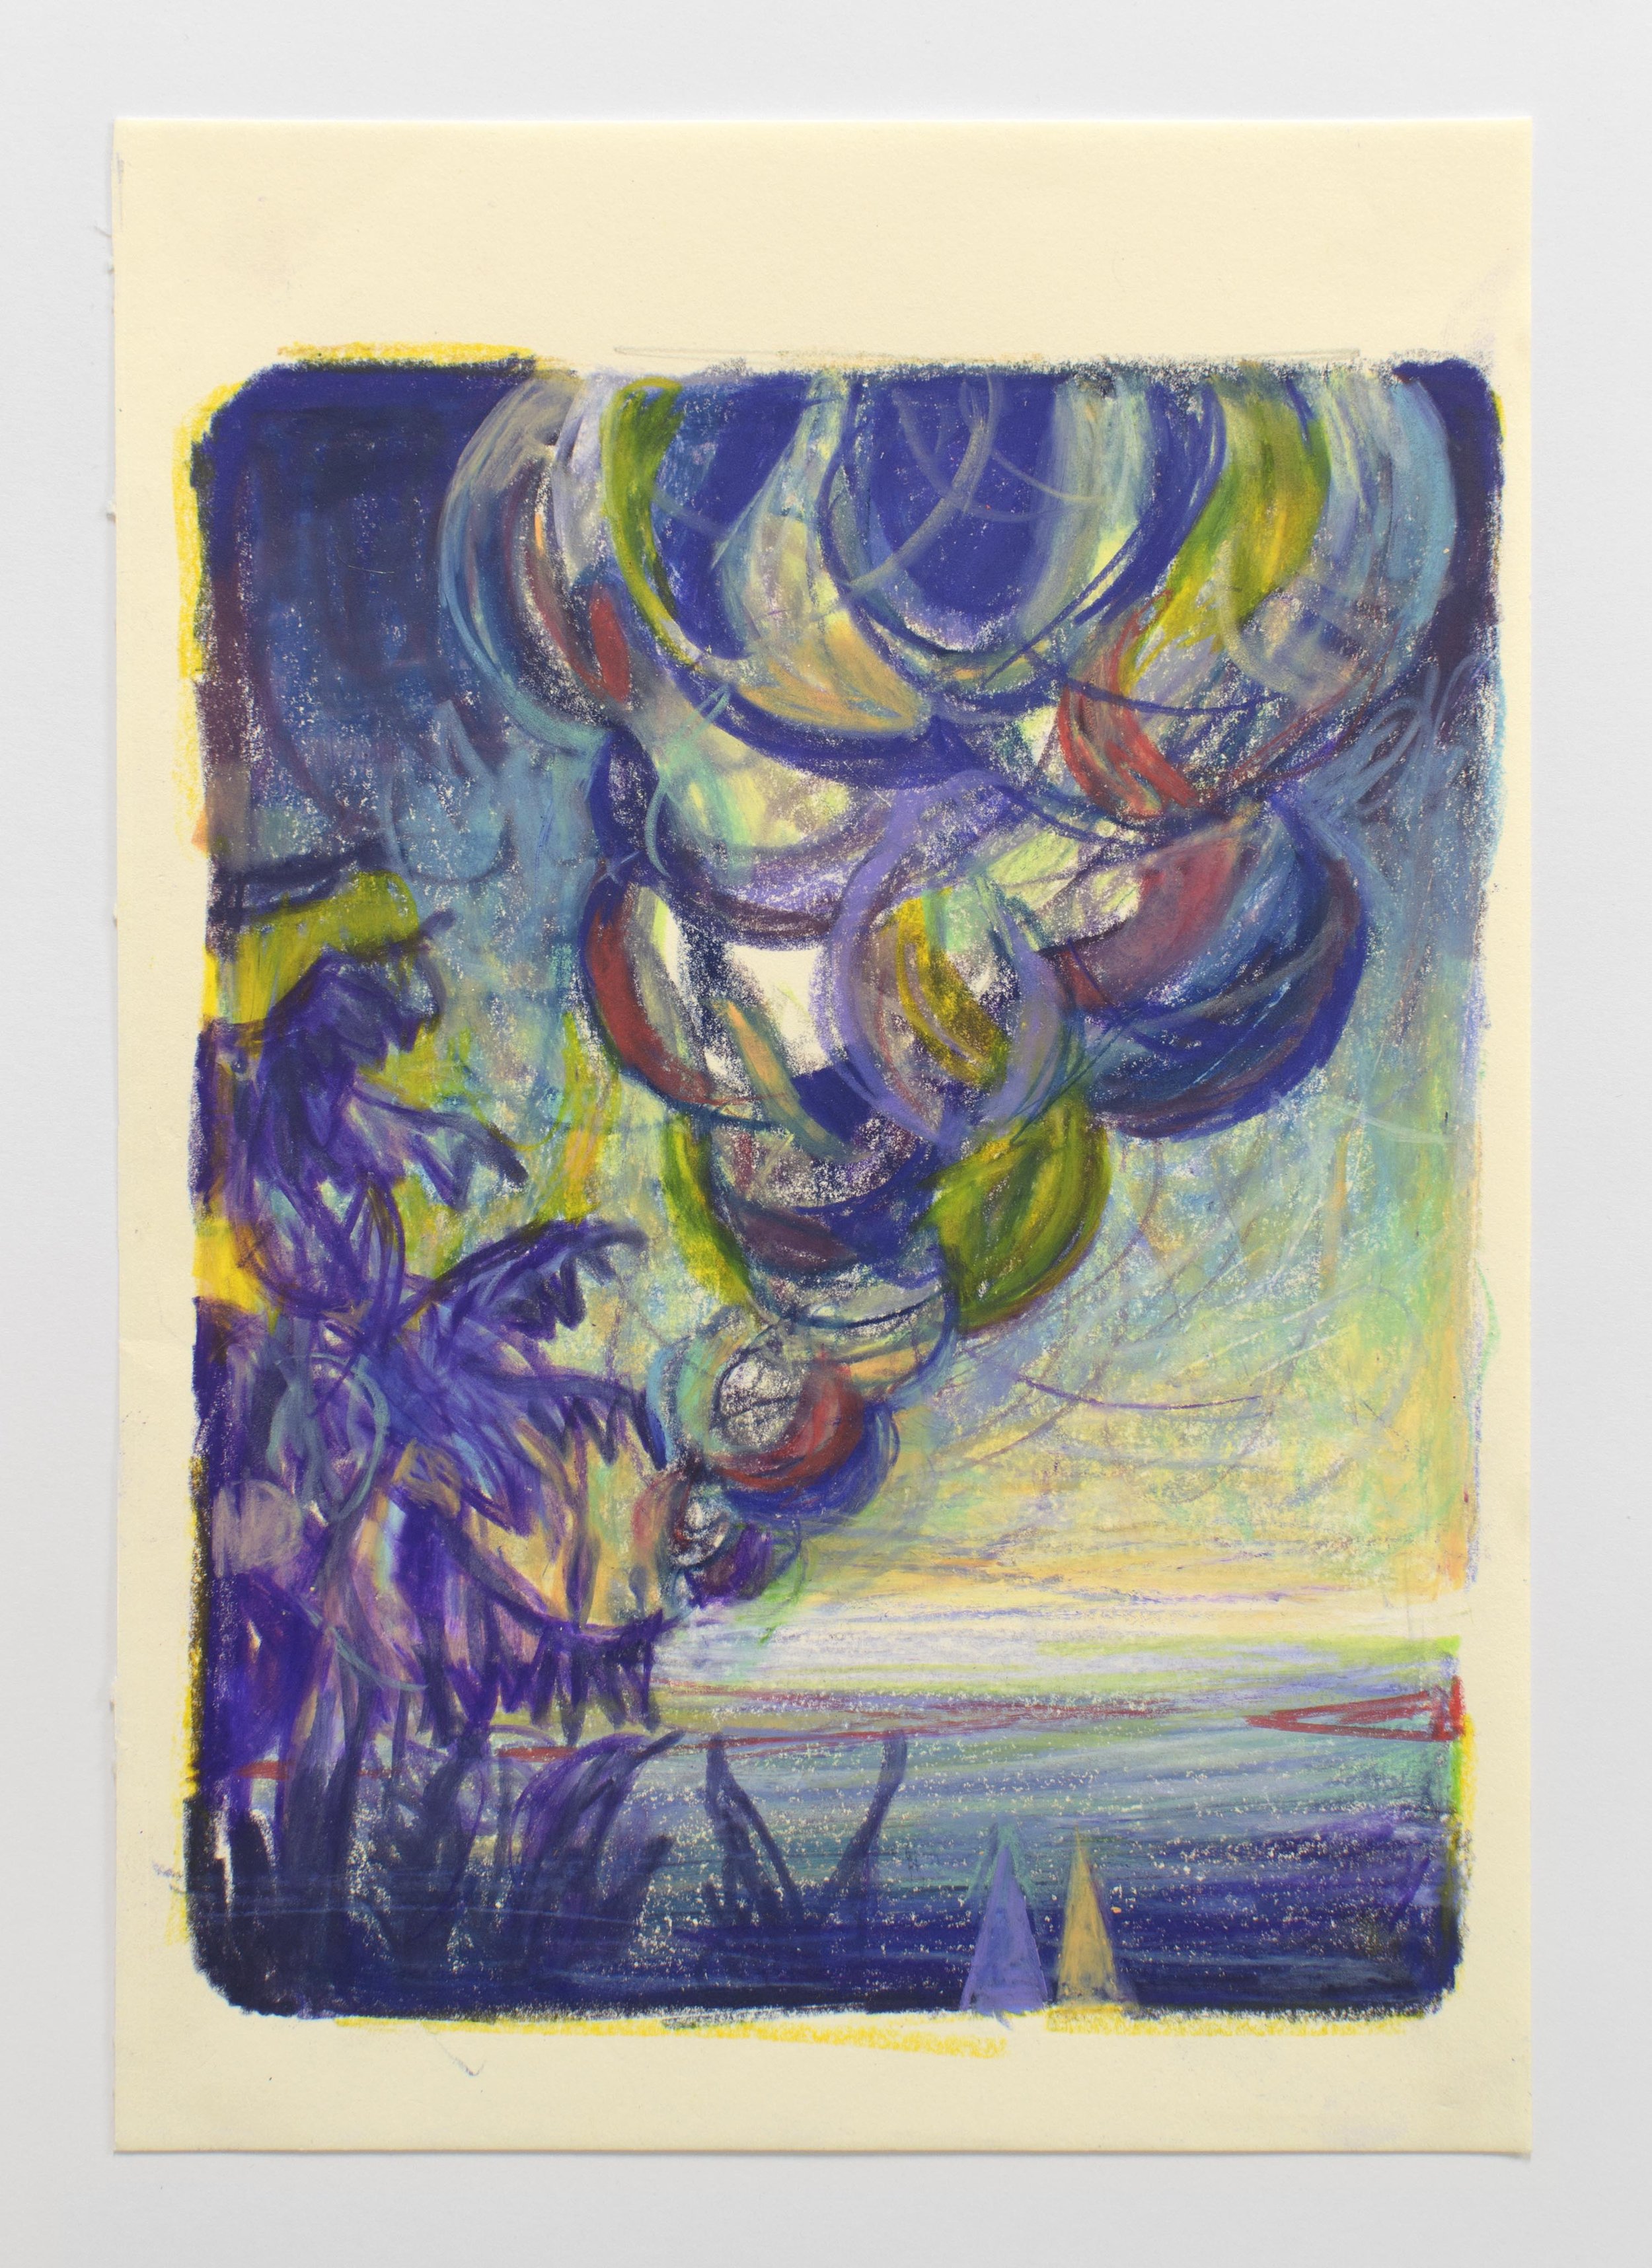   Turbulence I  crayon on paper 30 x 20 cm, 2020 